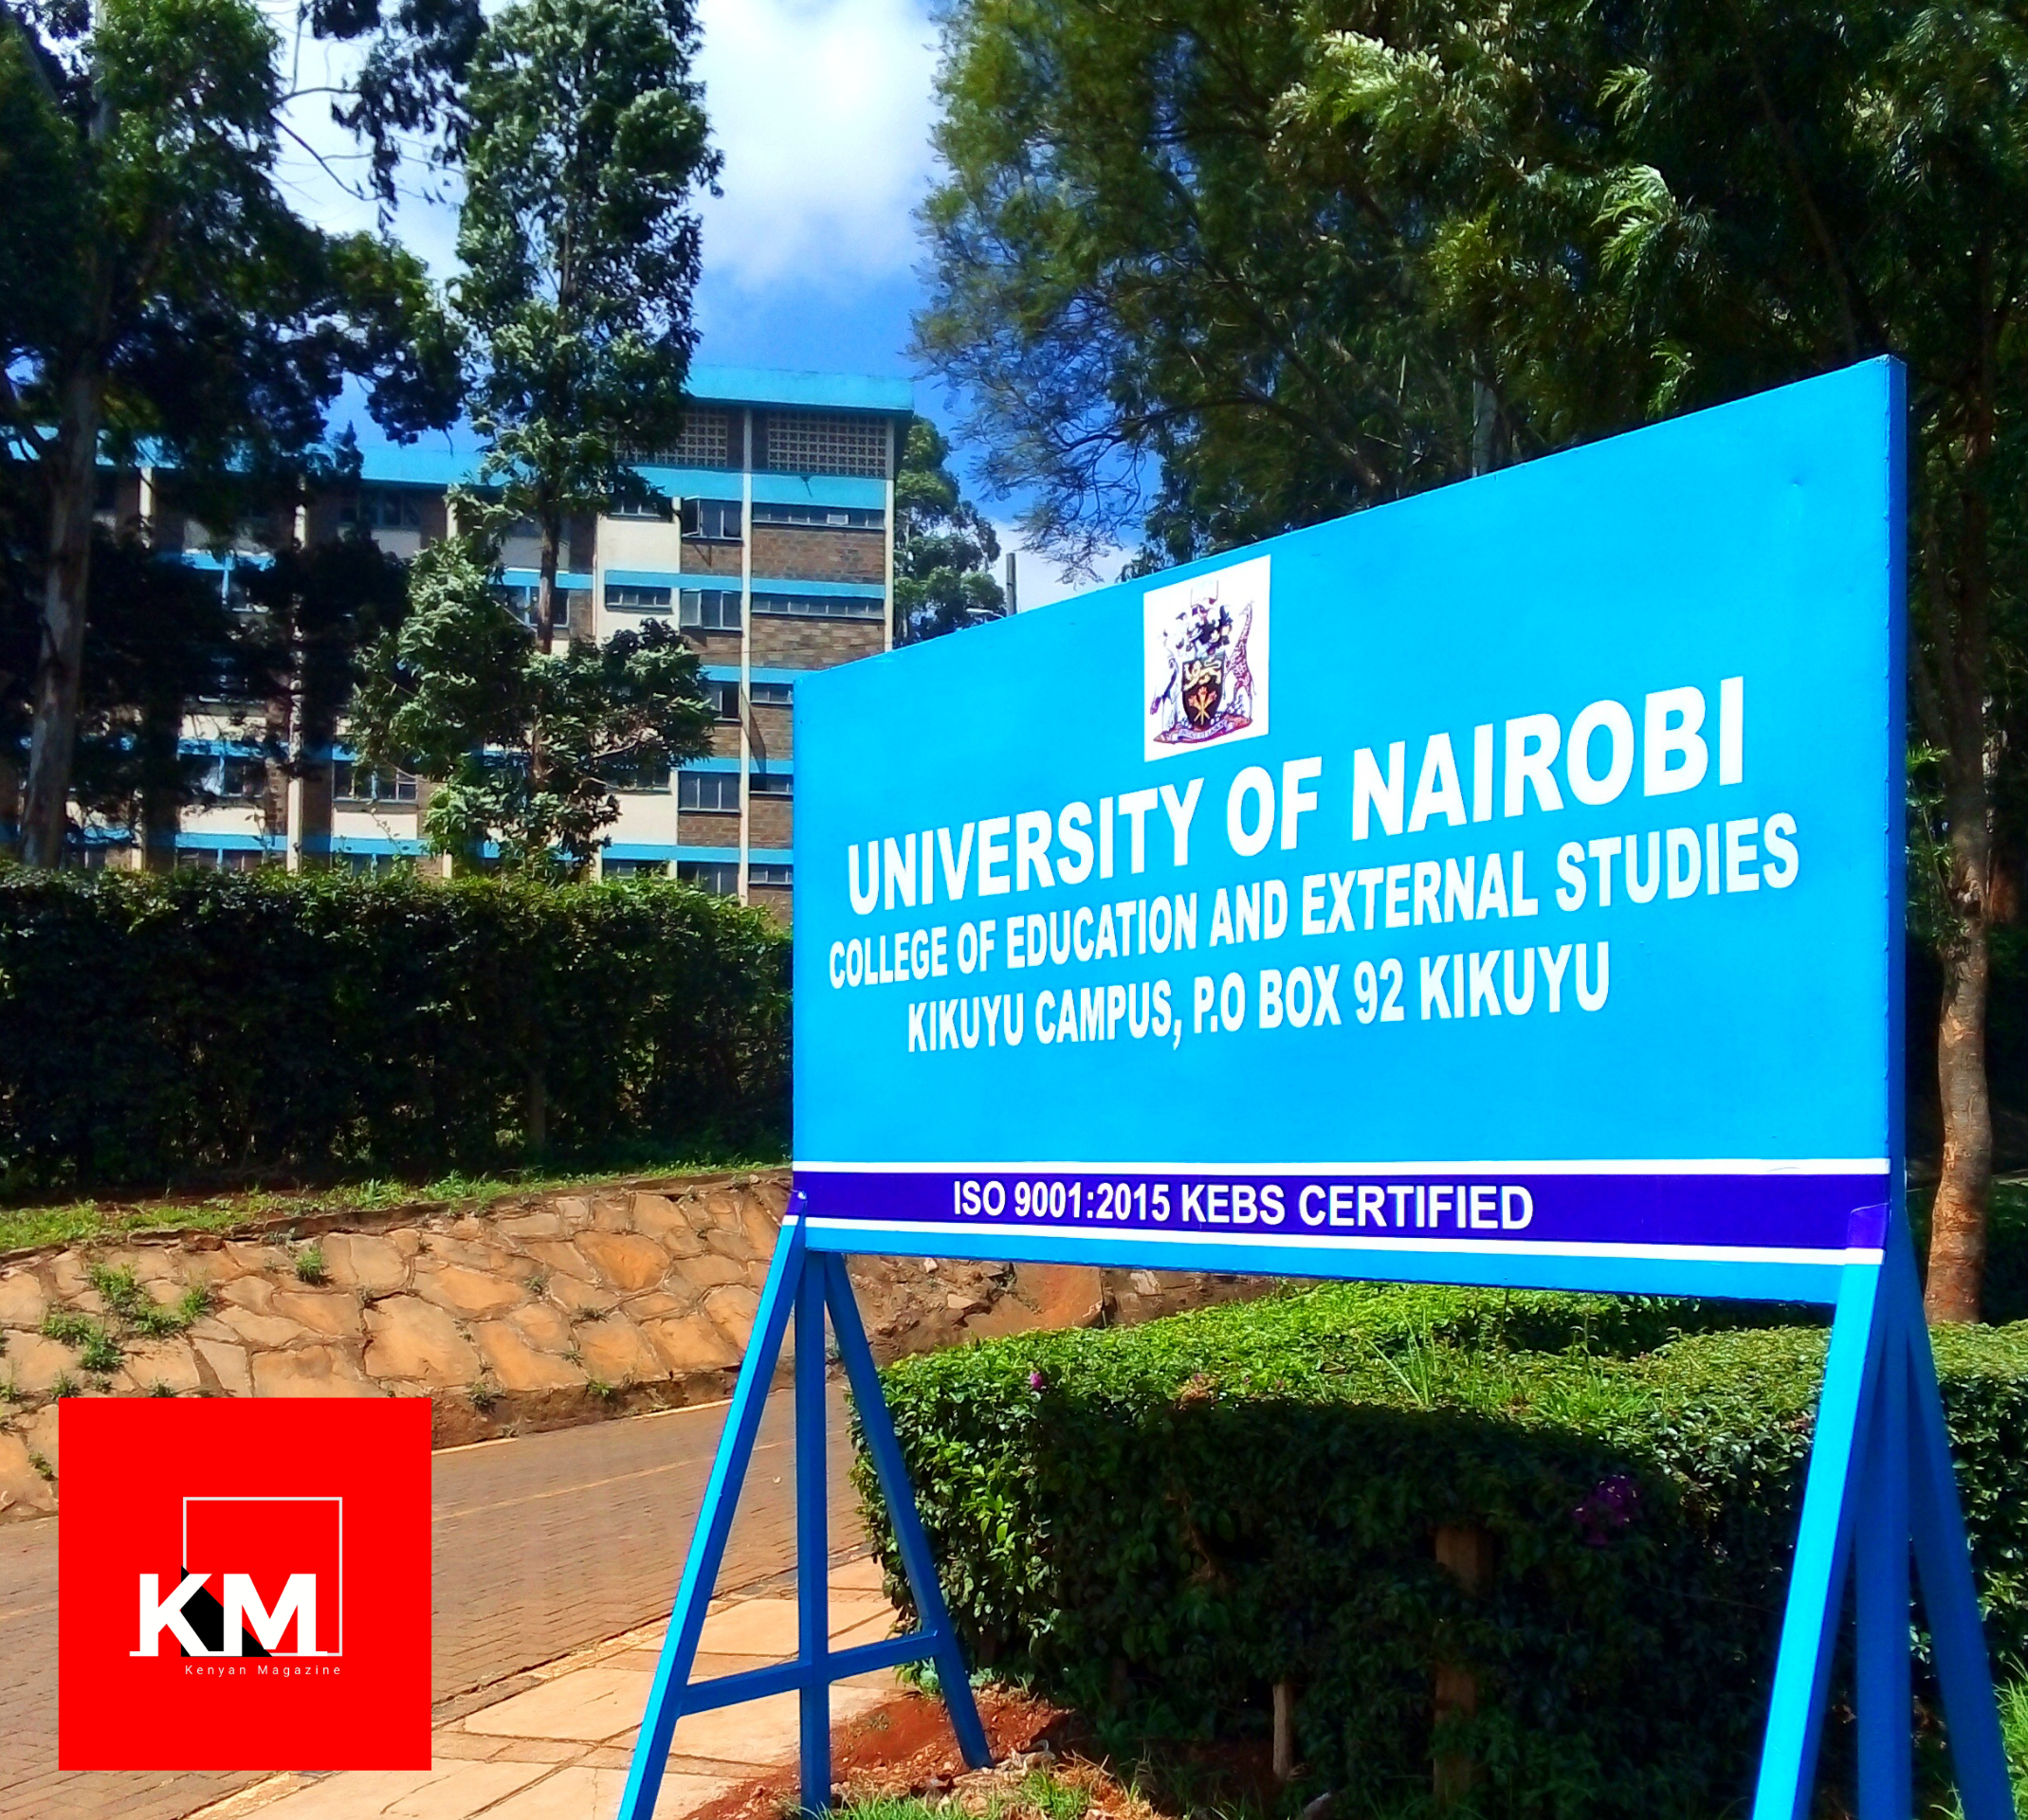 University of Nairobi College of Education and External Studies Kikuyu Campus